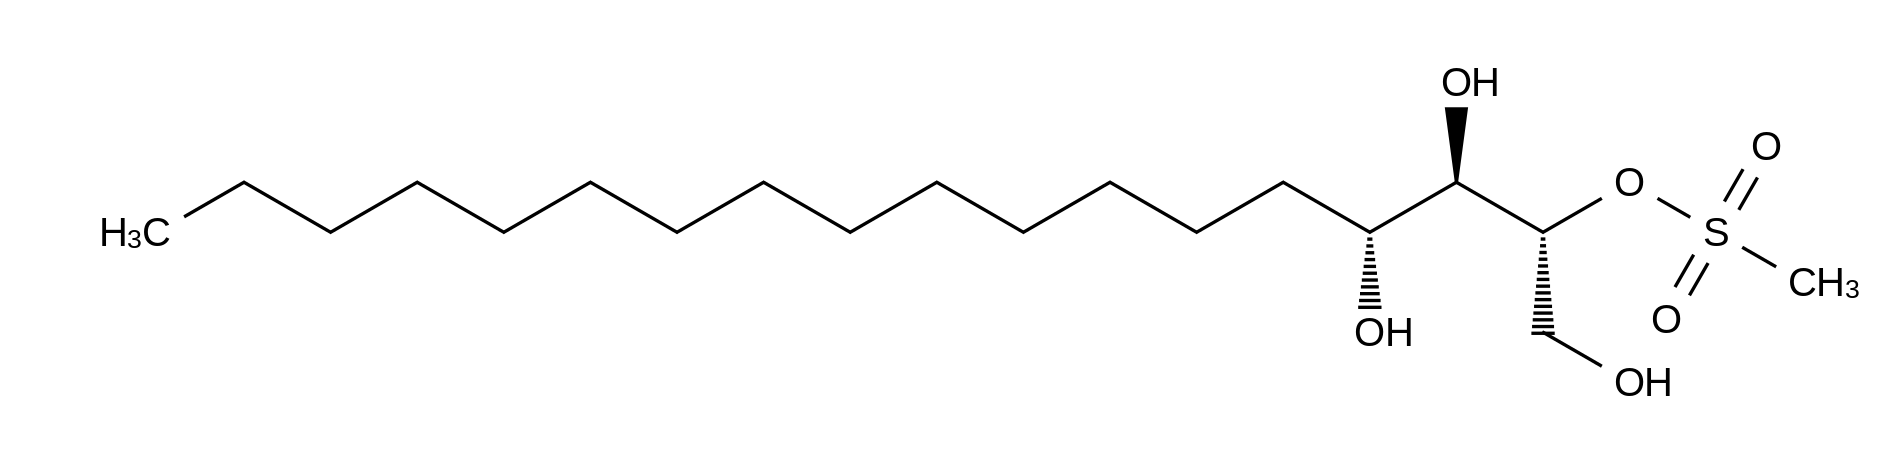 (2R,3R,4R)-1,2,3,4-Octadecanetetrol 2-Methanesulfonate